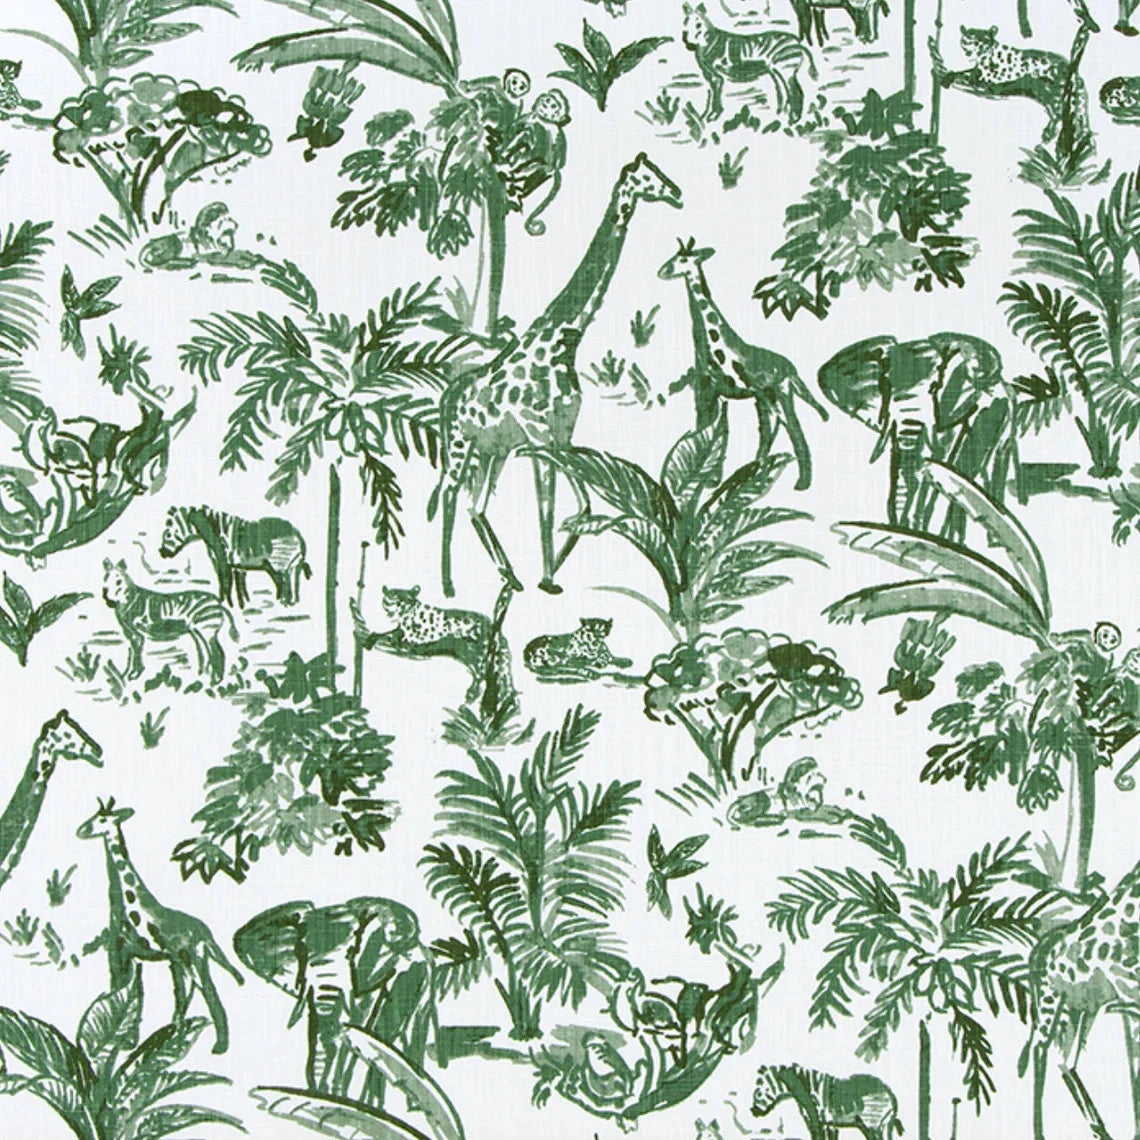 pinch pleated curtains in meru fairway green safari animal toile